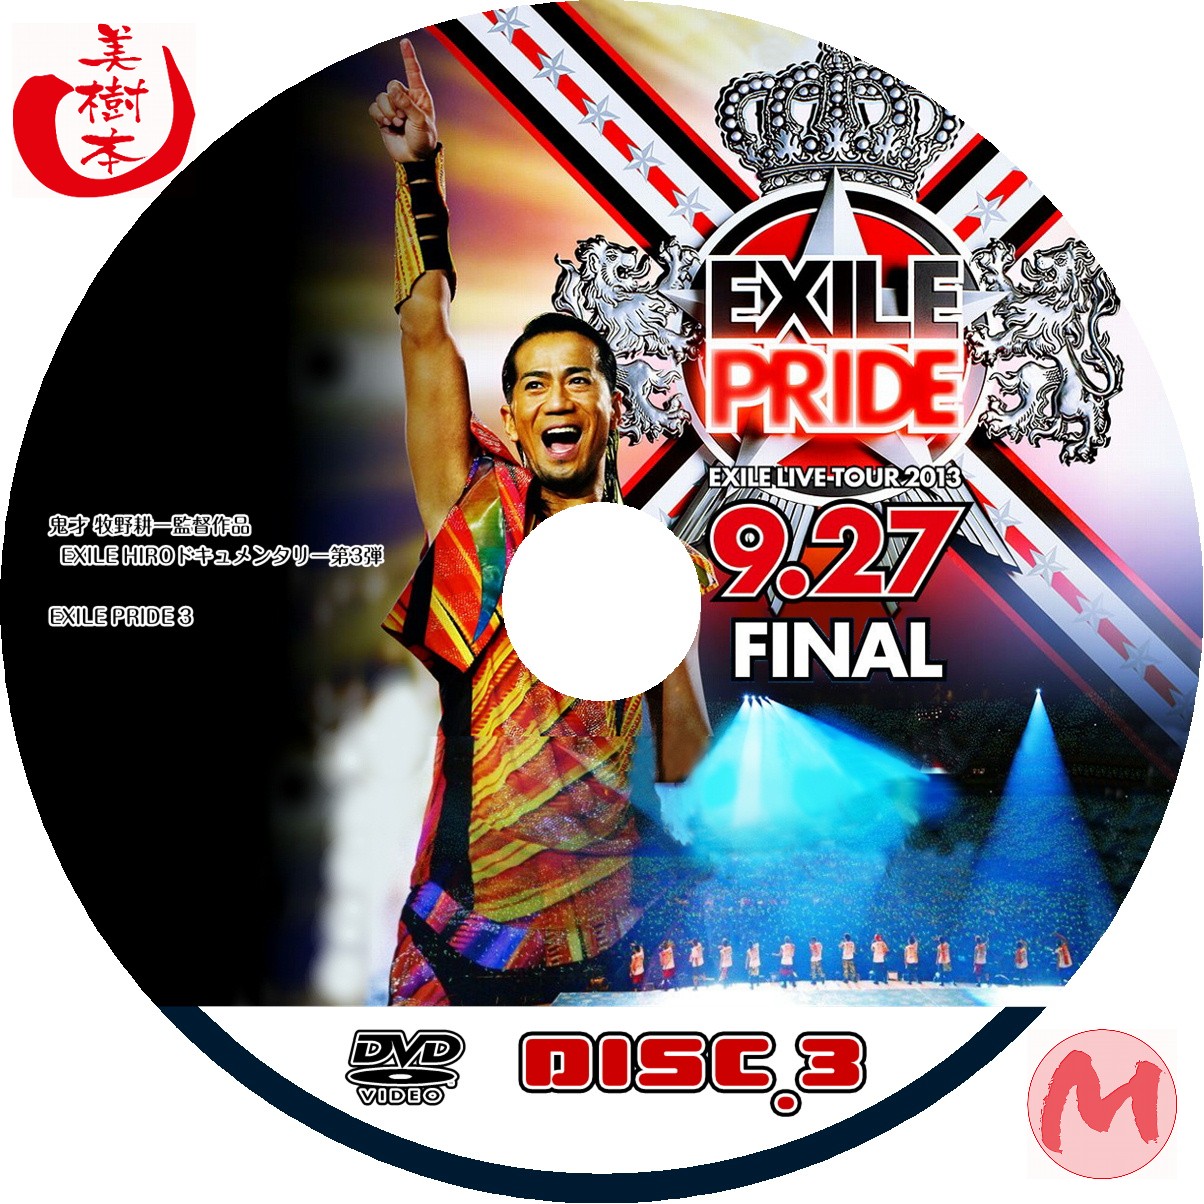 EXILE pride Hiro dvd - ミュージック